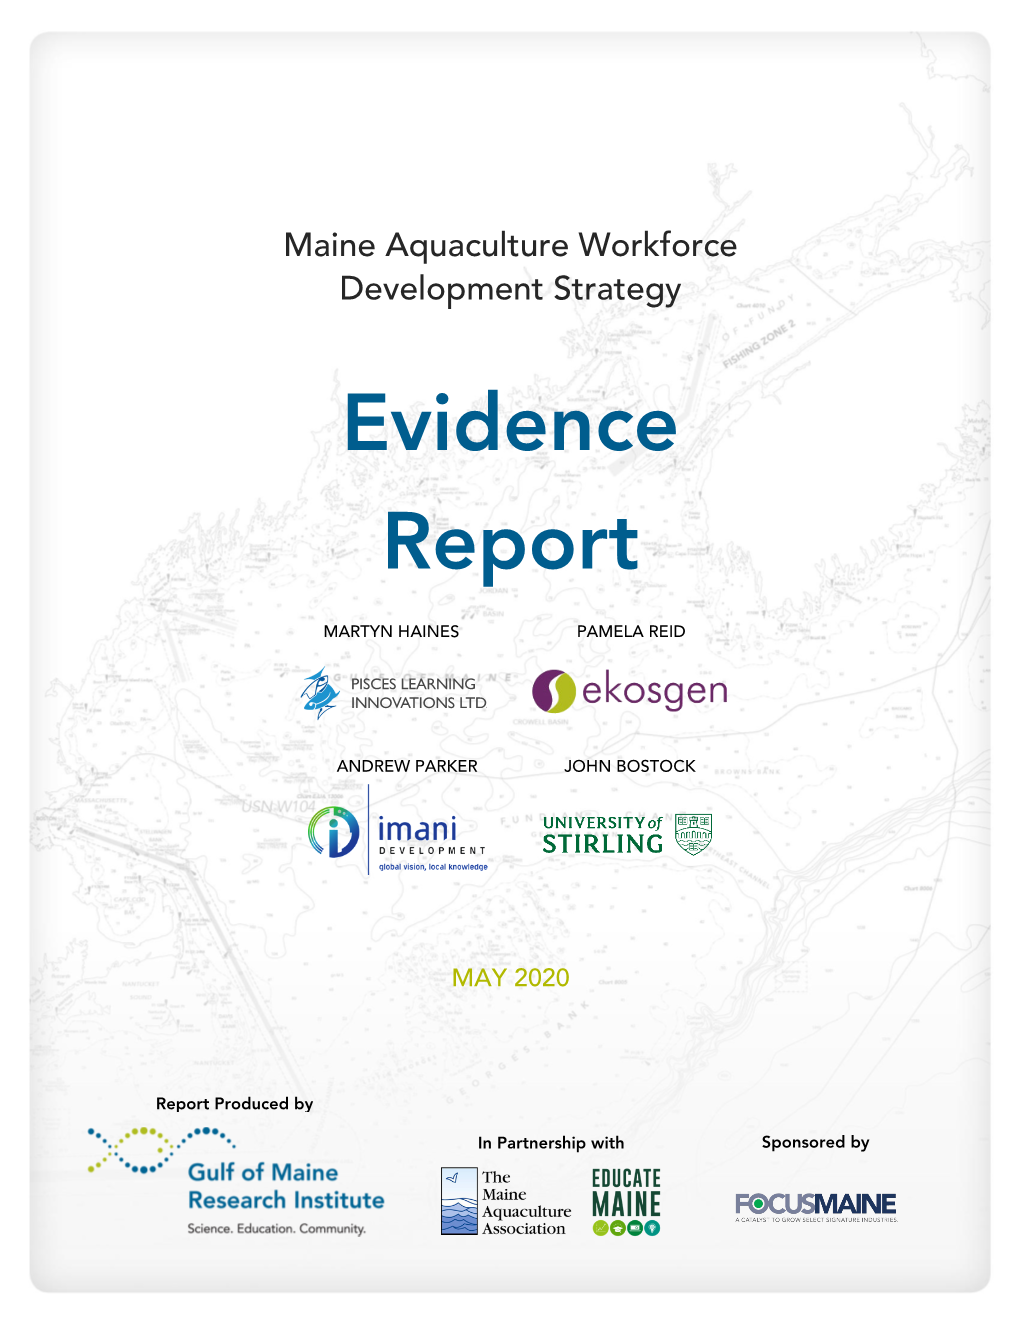 Maine Aquaculture Workforce Development Strategy Evidence Report